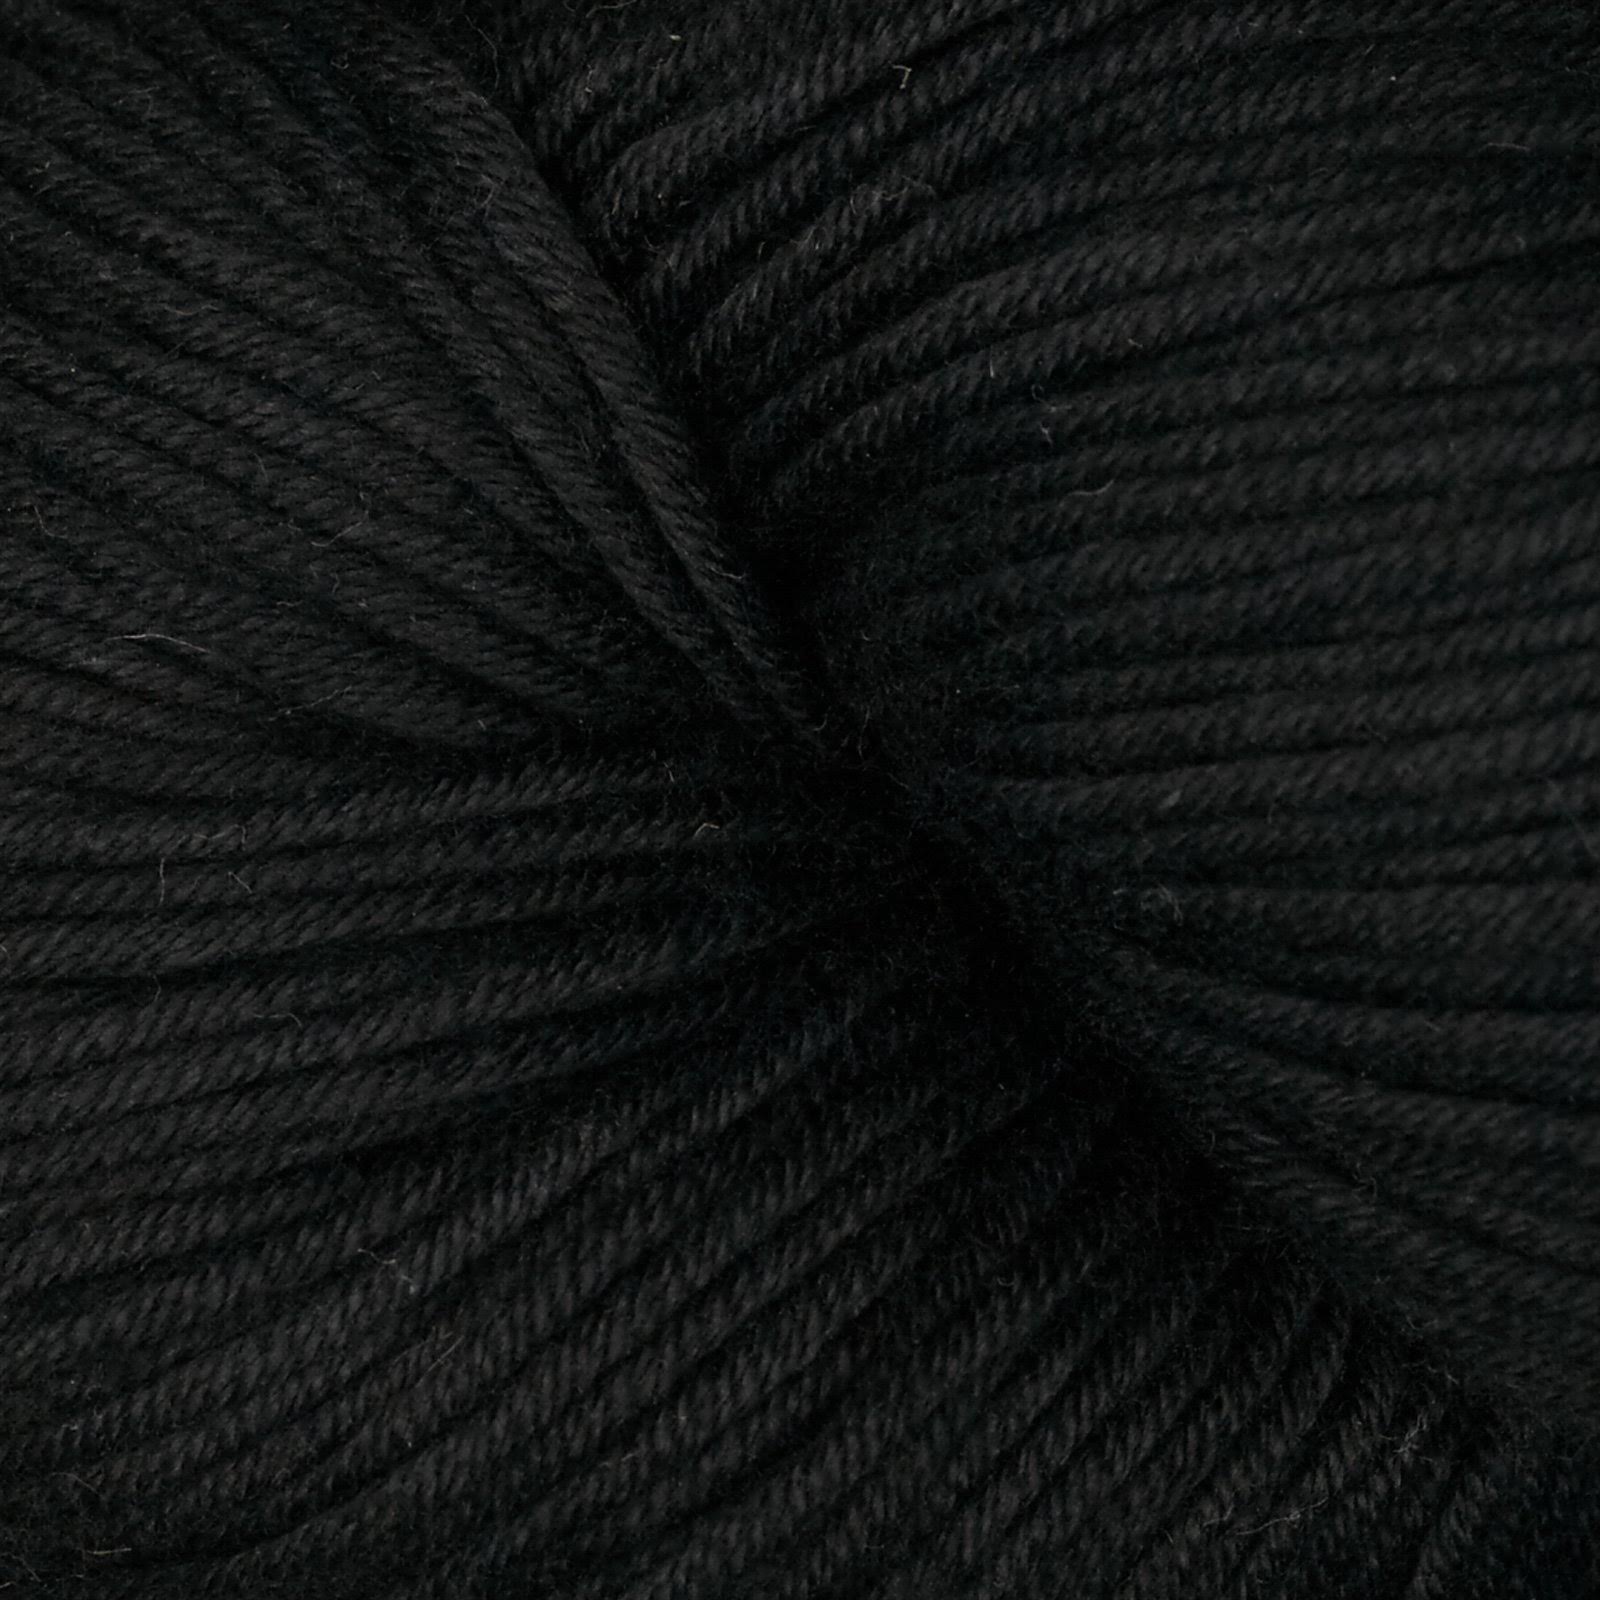 Berroco Modern Cotton Yarn - 1634 Longspur